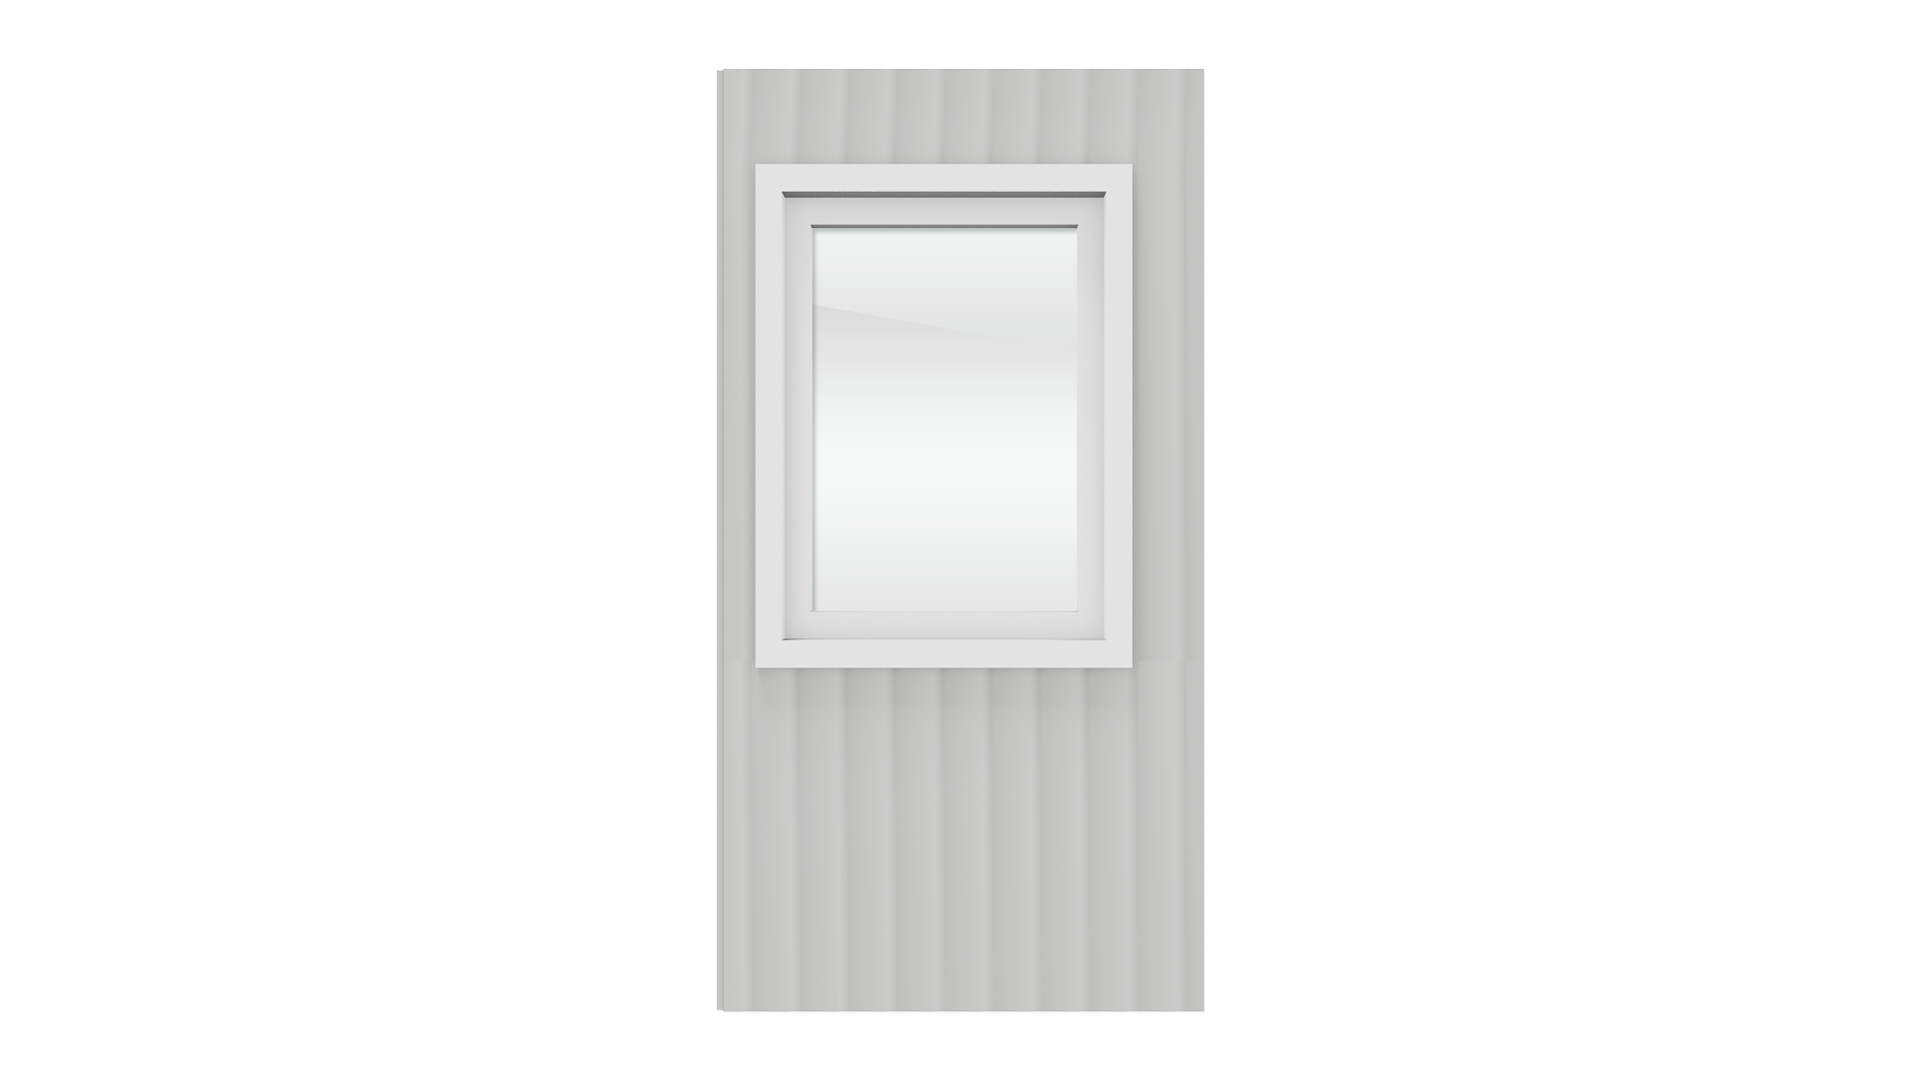 Okenný panel CONTAINEX CLASSIC Line